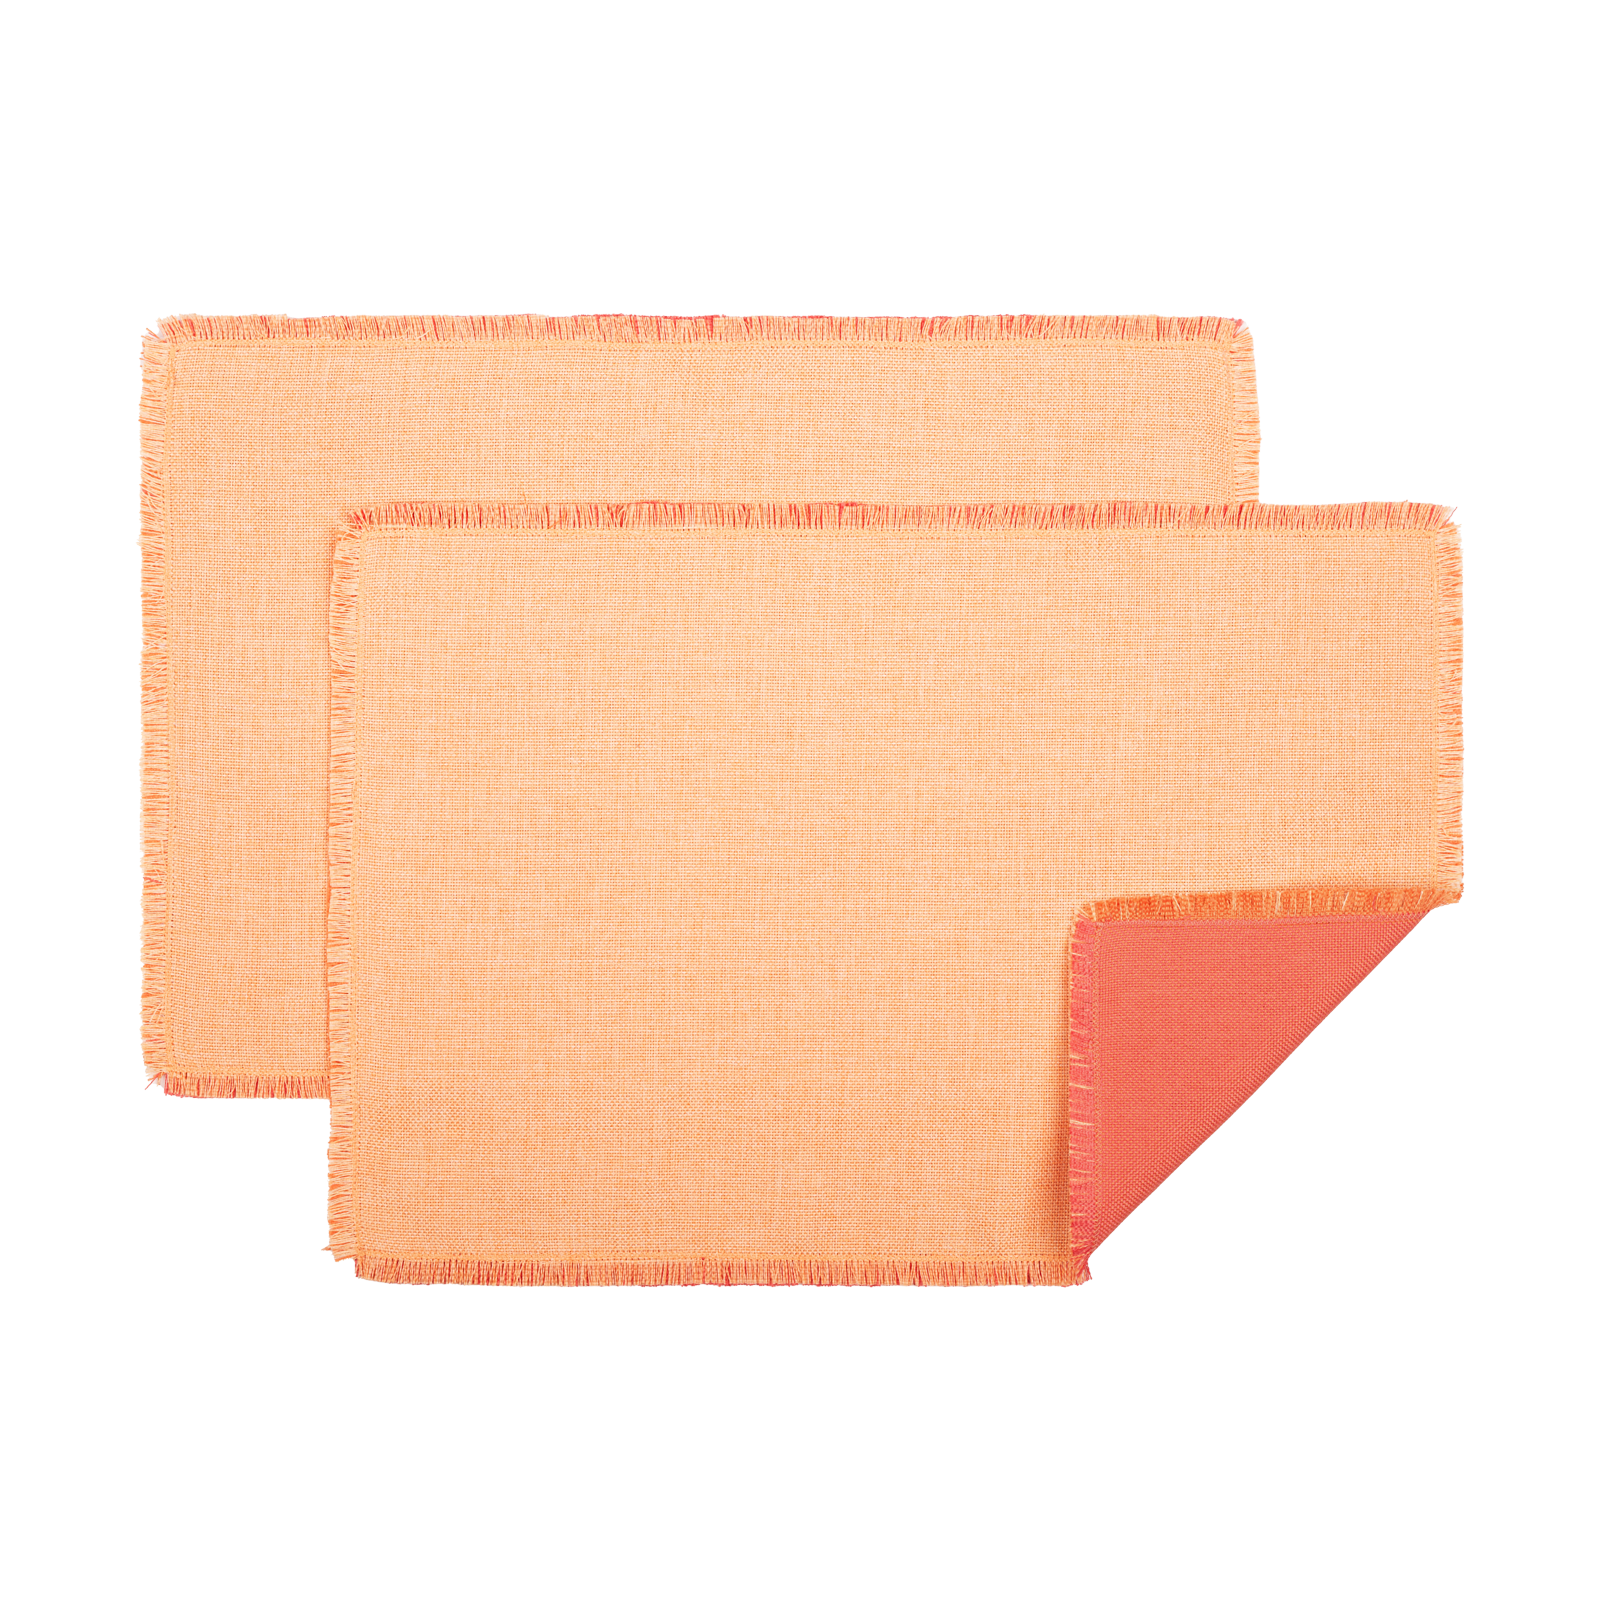 Größe: 33x 48 cm Farbe: koralle/peach #farbe_koralle/peach